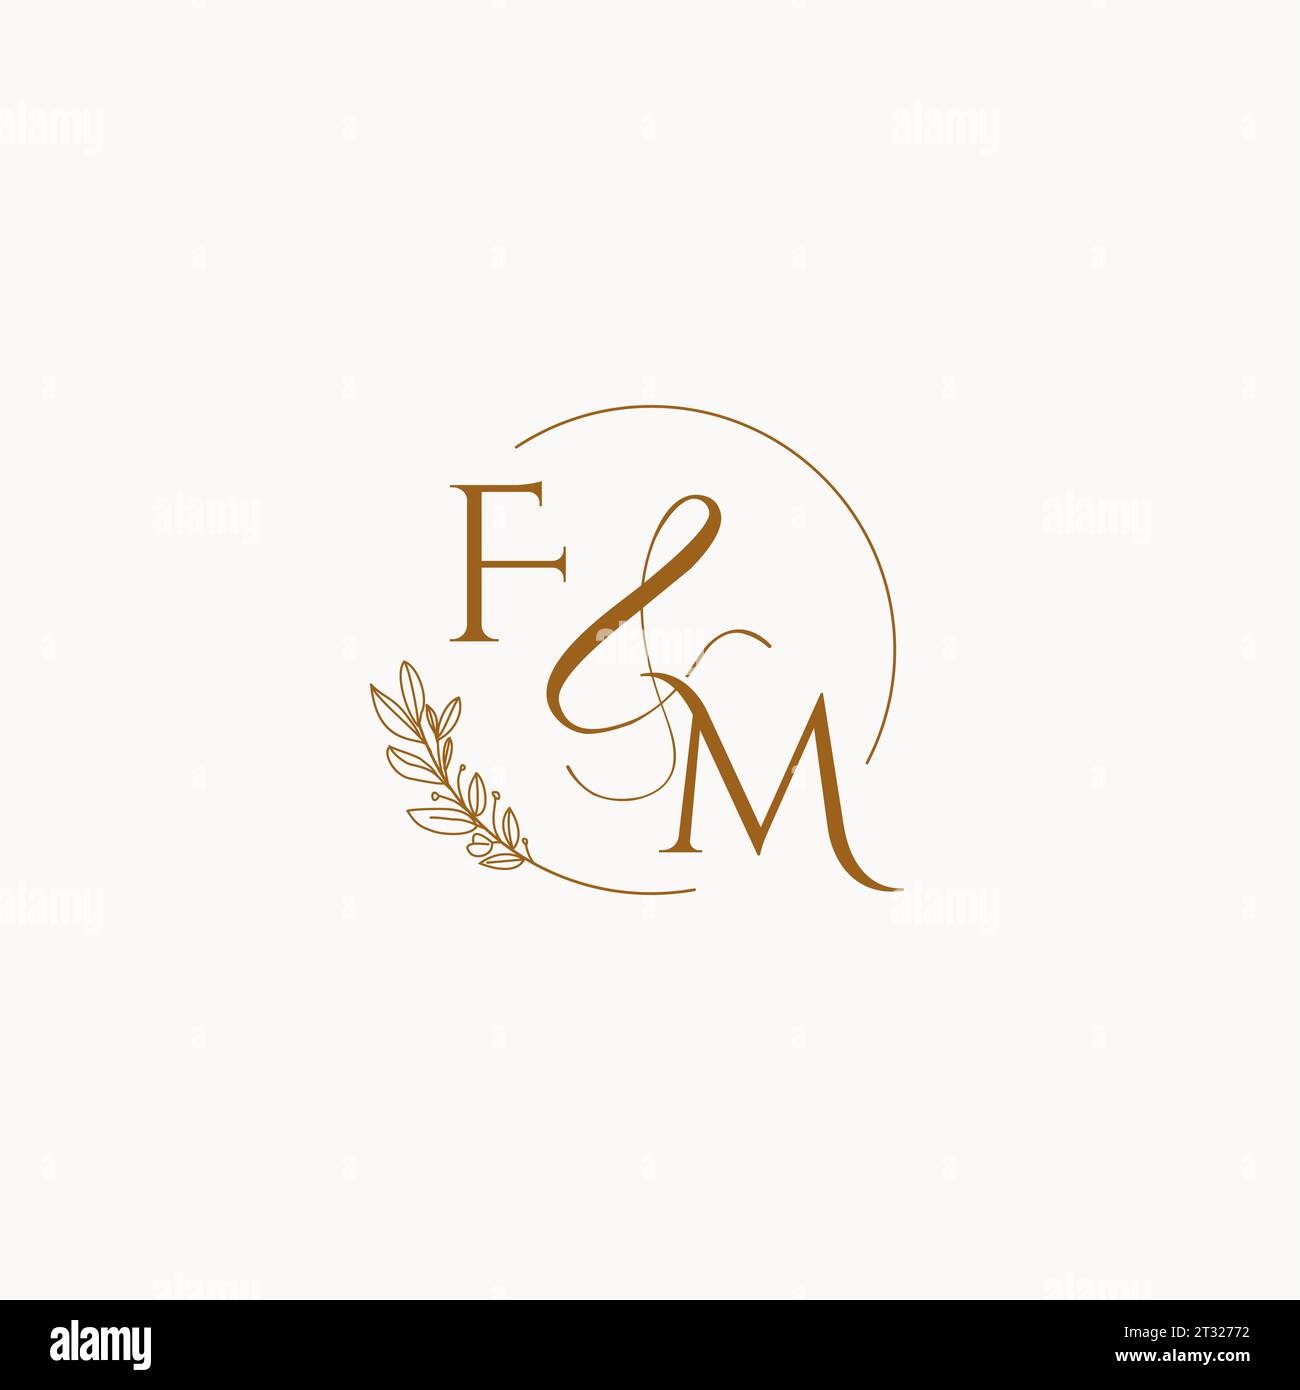 FM initial wedding monogram logo design ideas Stock Vector